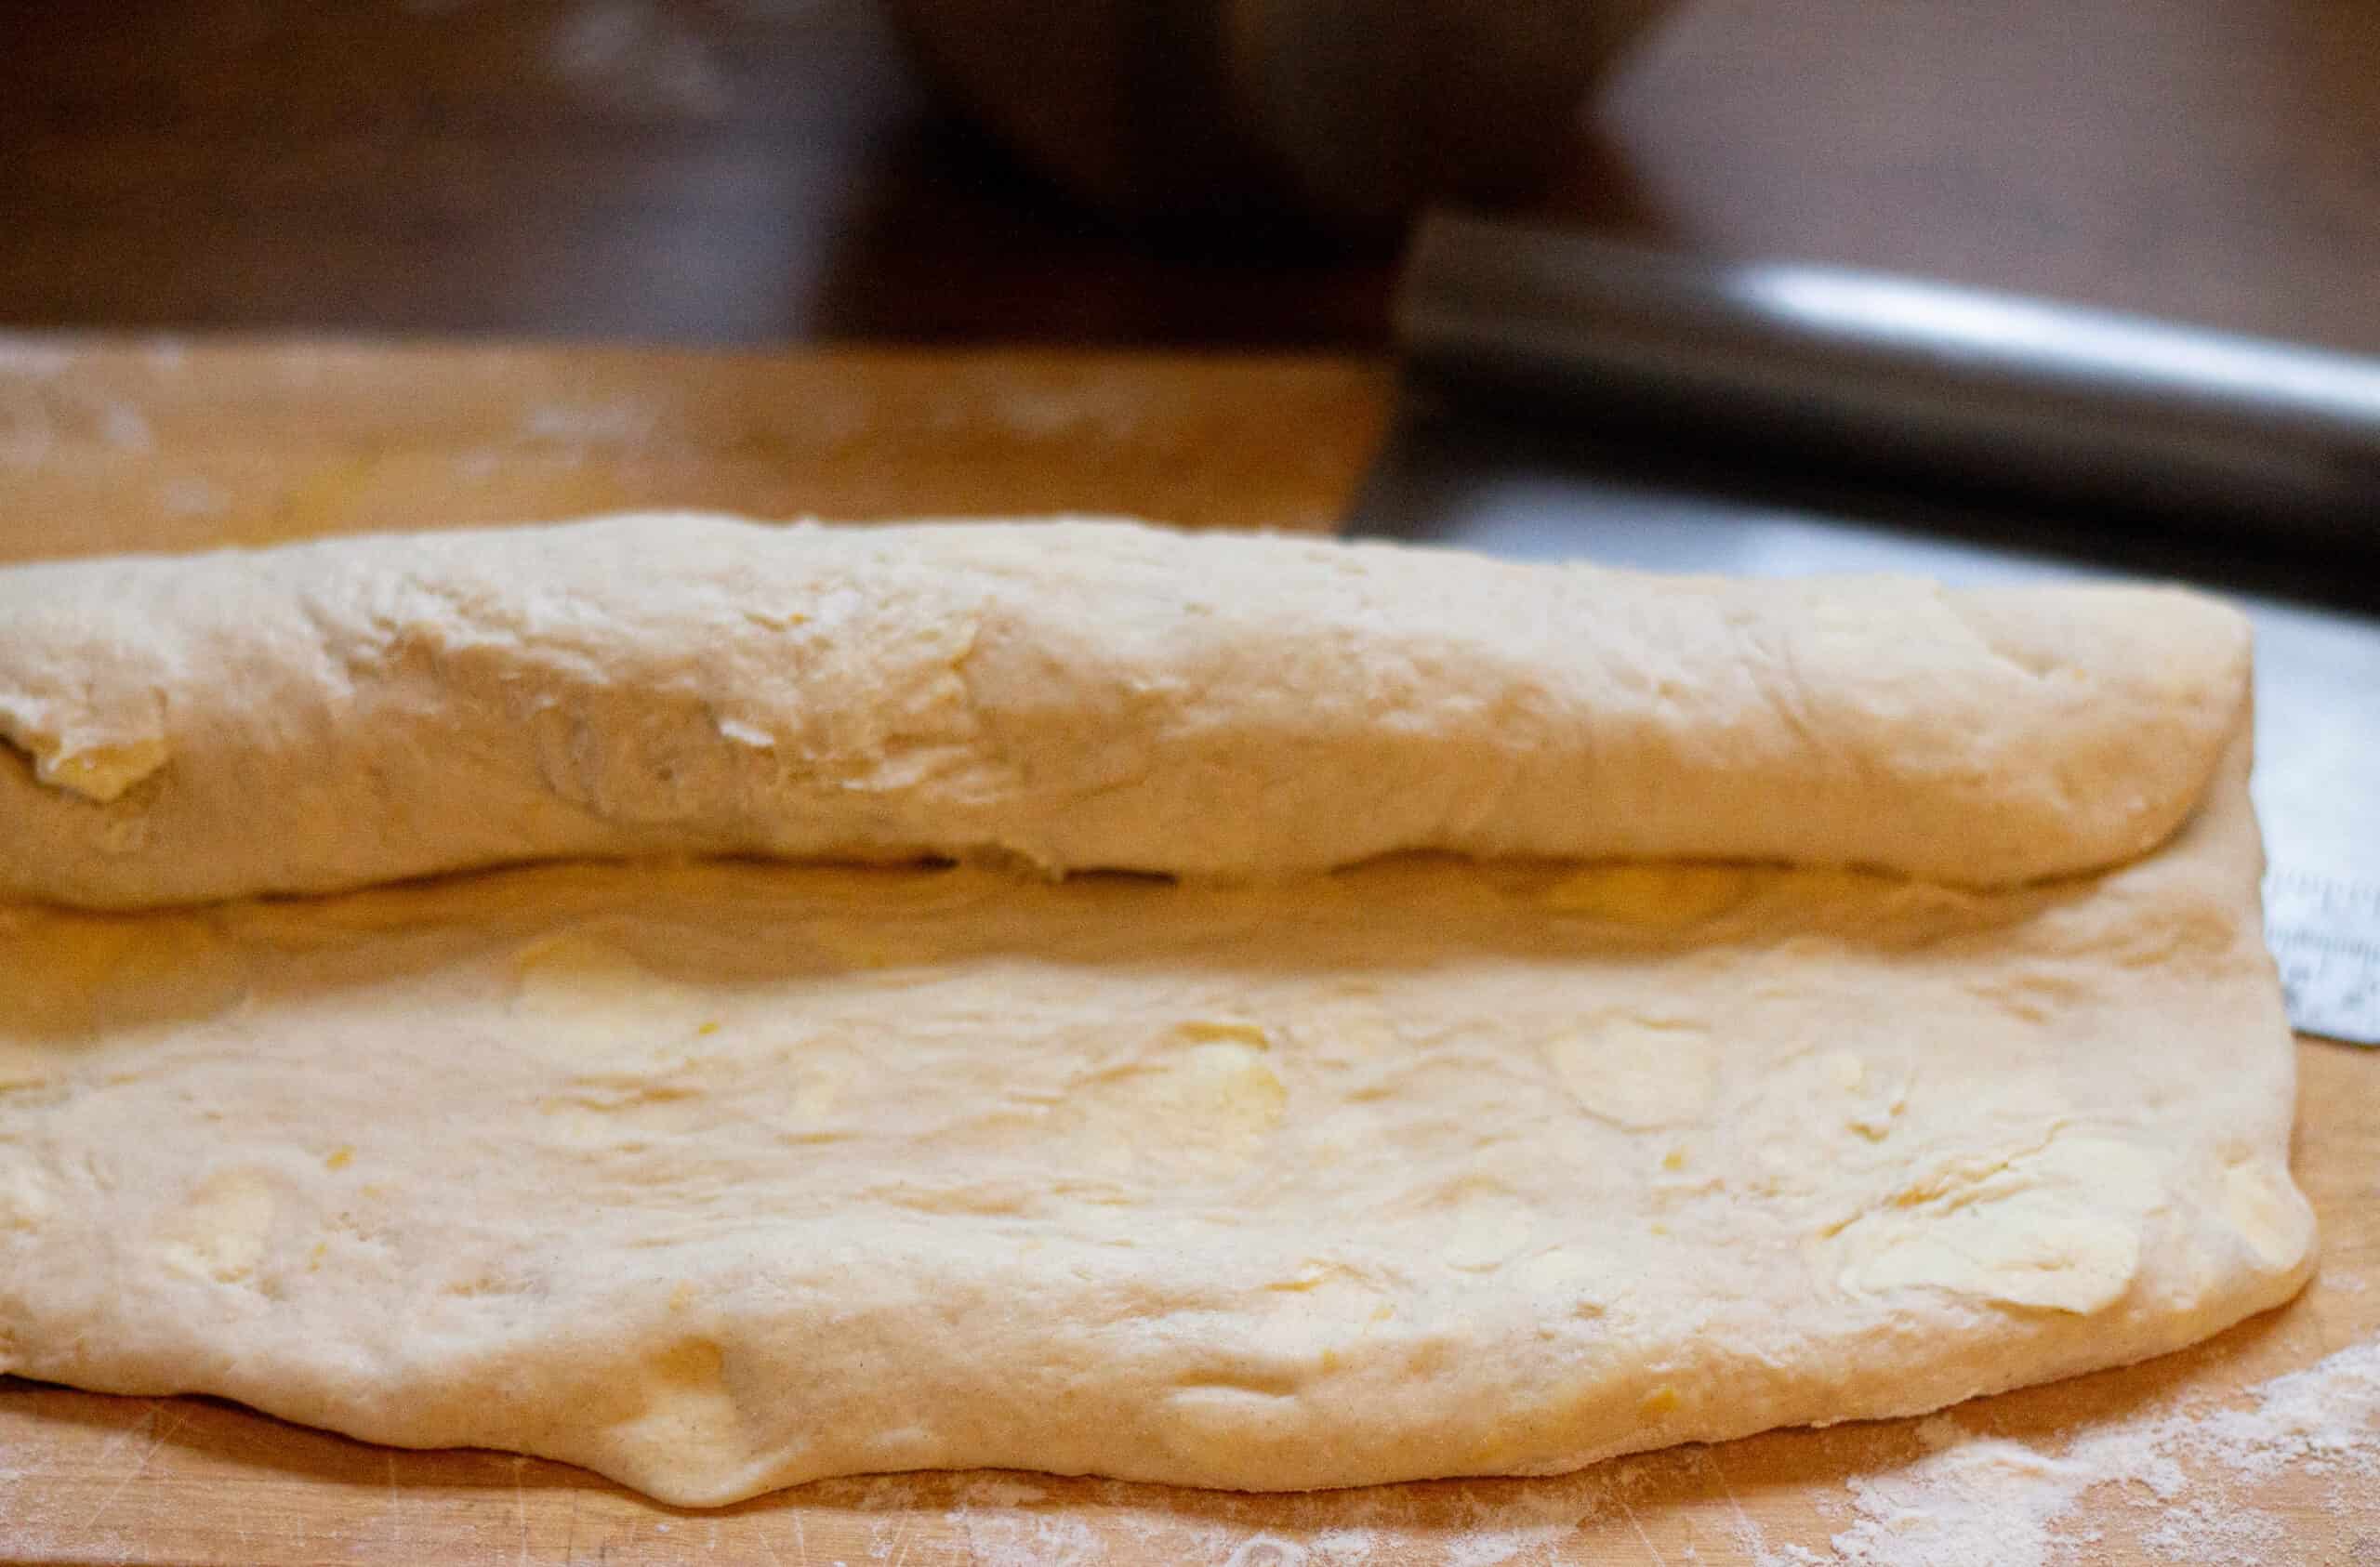 Rolling pandoro dough into a swiss roll